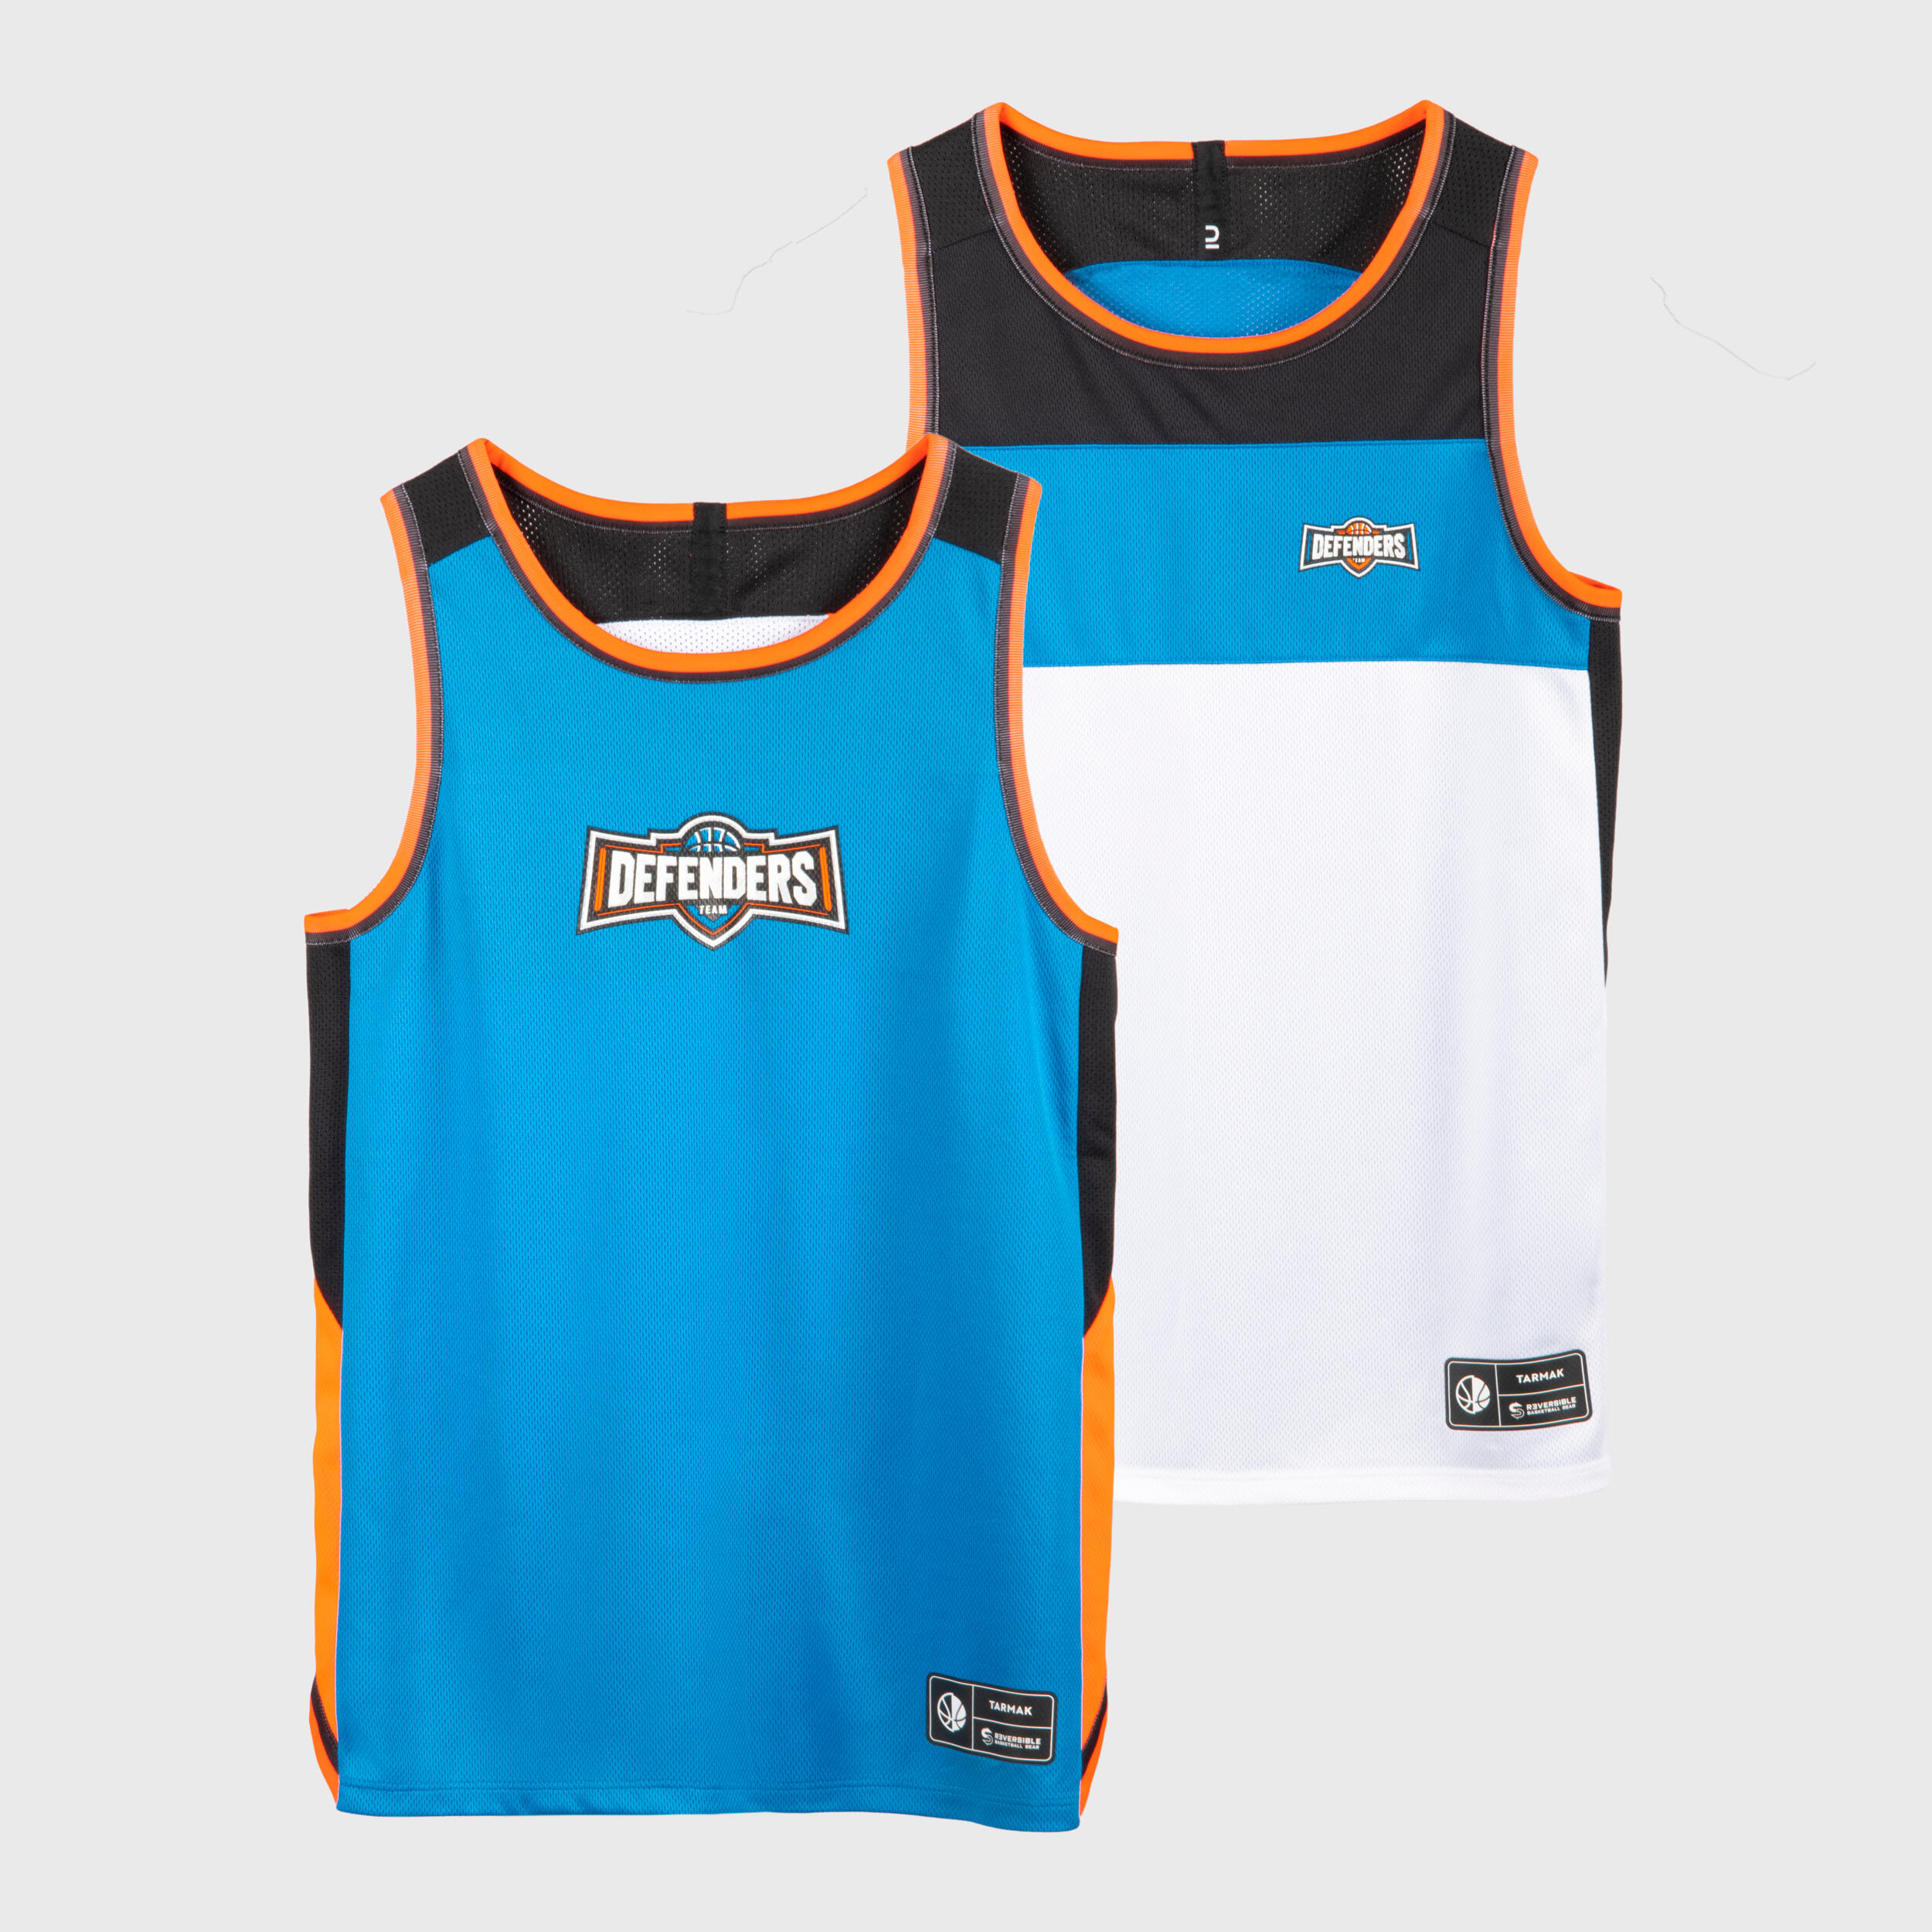 TARMAK Kids' Reversible Sleeveless Basketball Jersey T500R - Blue/White/Orange